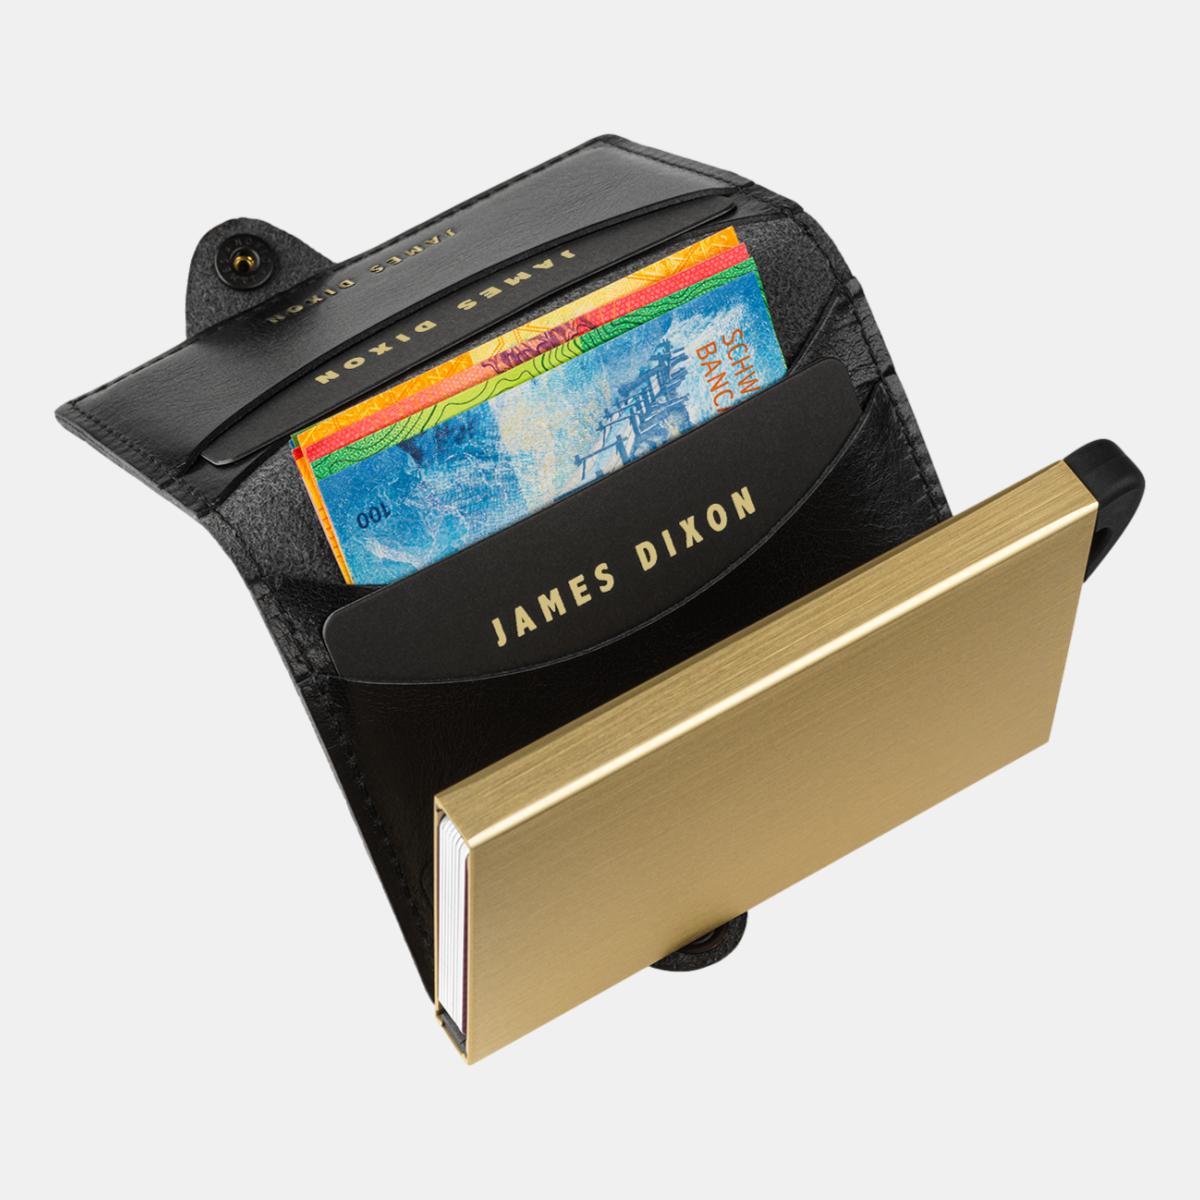 jd0124 james dixon boton classic black gold wallet notes